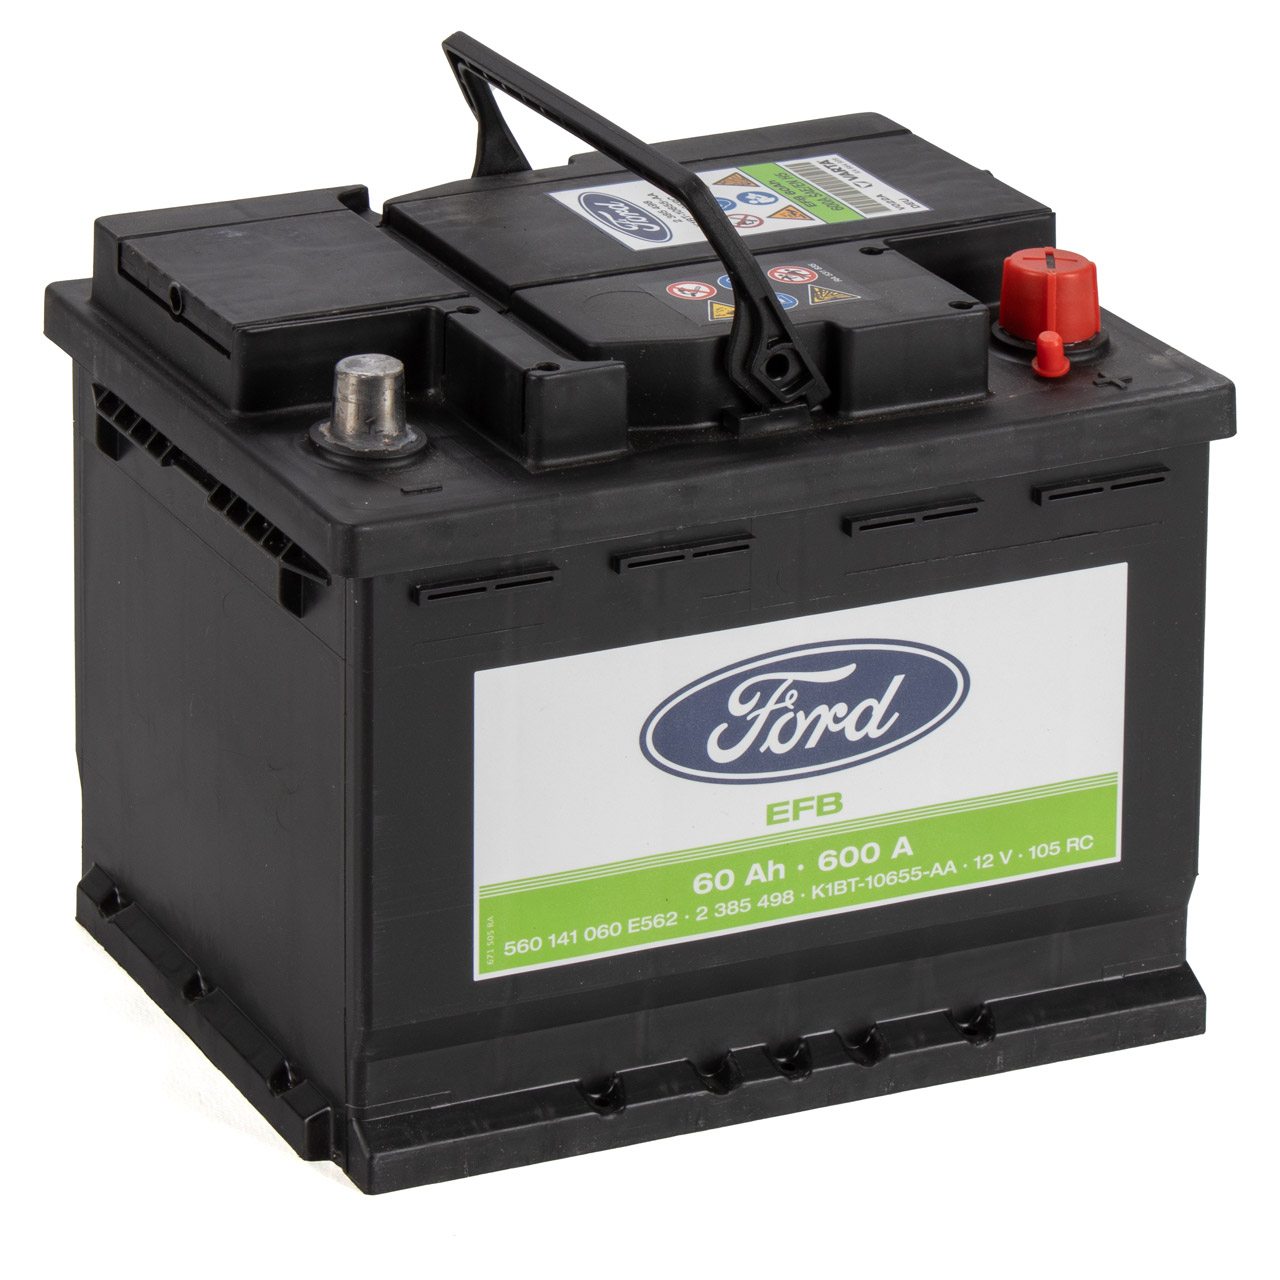 Original FORD Autobatterien - 2 385 498